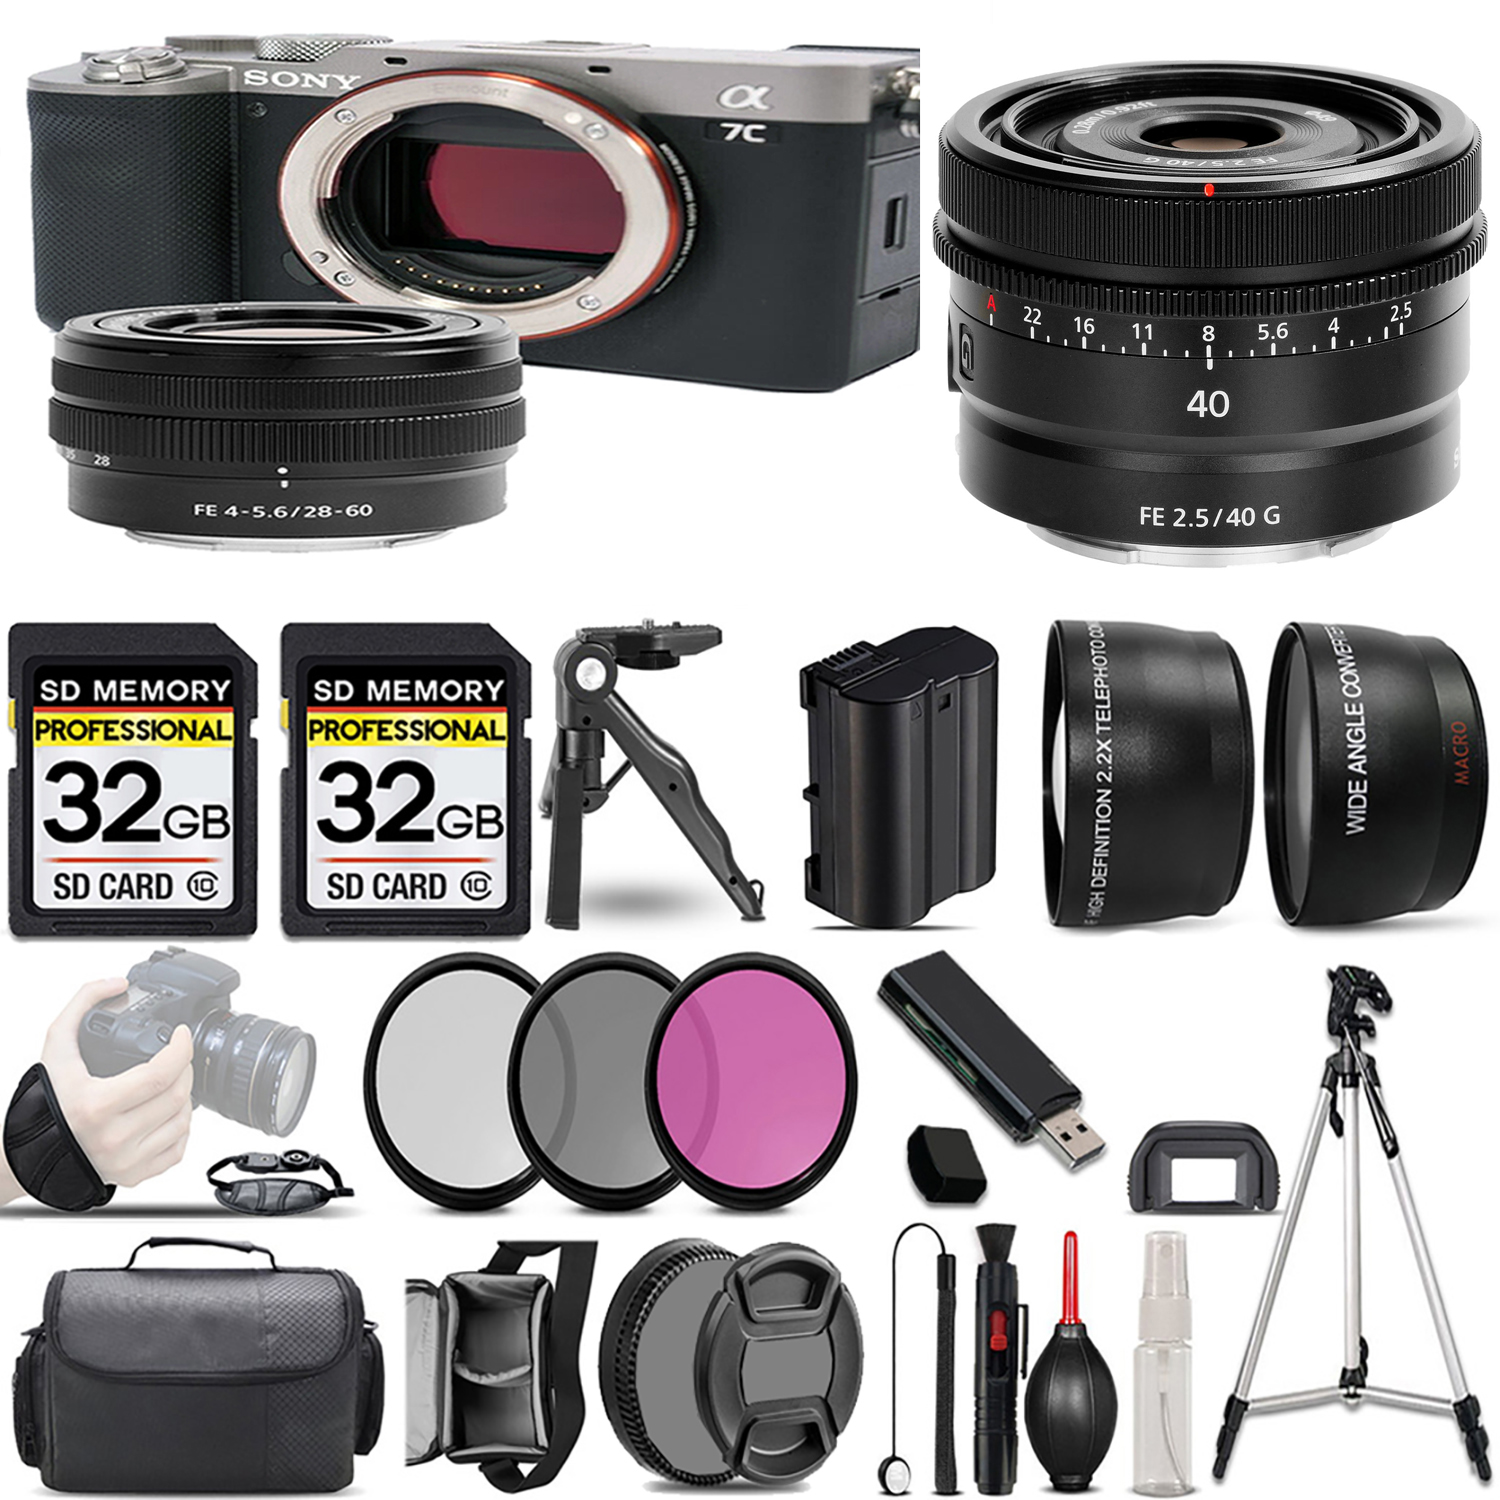 Alpha a7C Camera (Silver) + 28-60mm Lens + 40mm G Lens + 3 Piece Filter Set + 64GB *FREE SHIPPING*